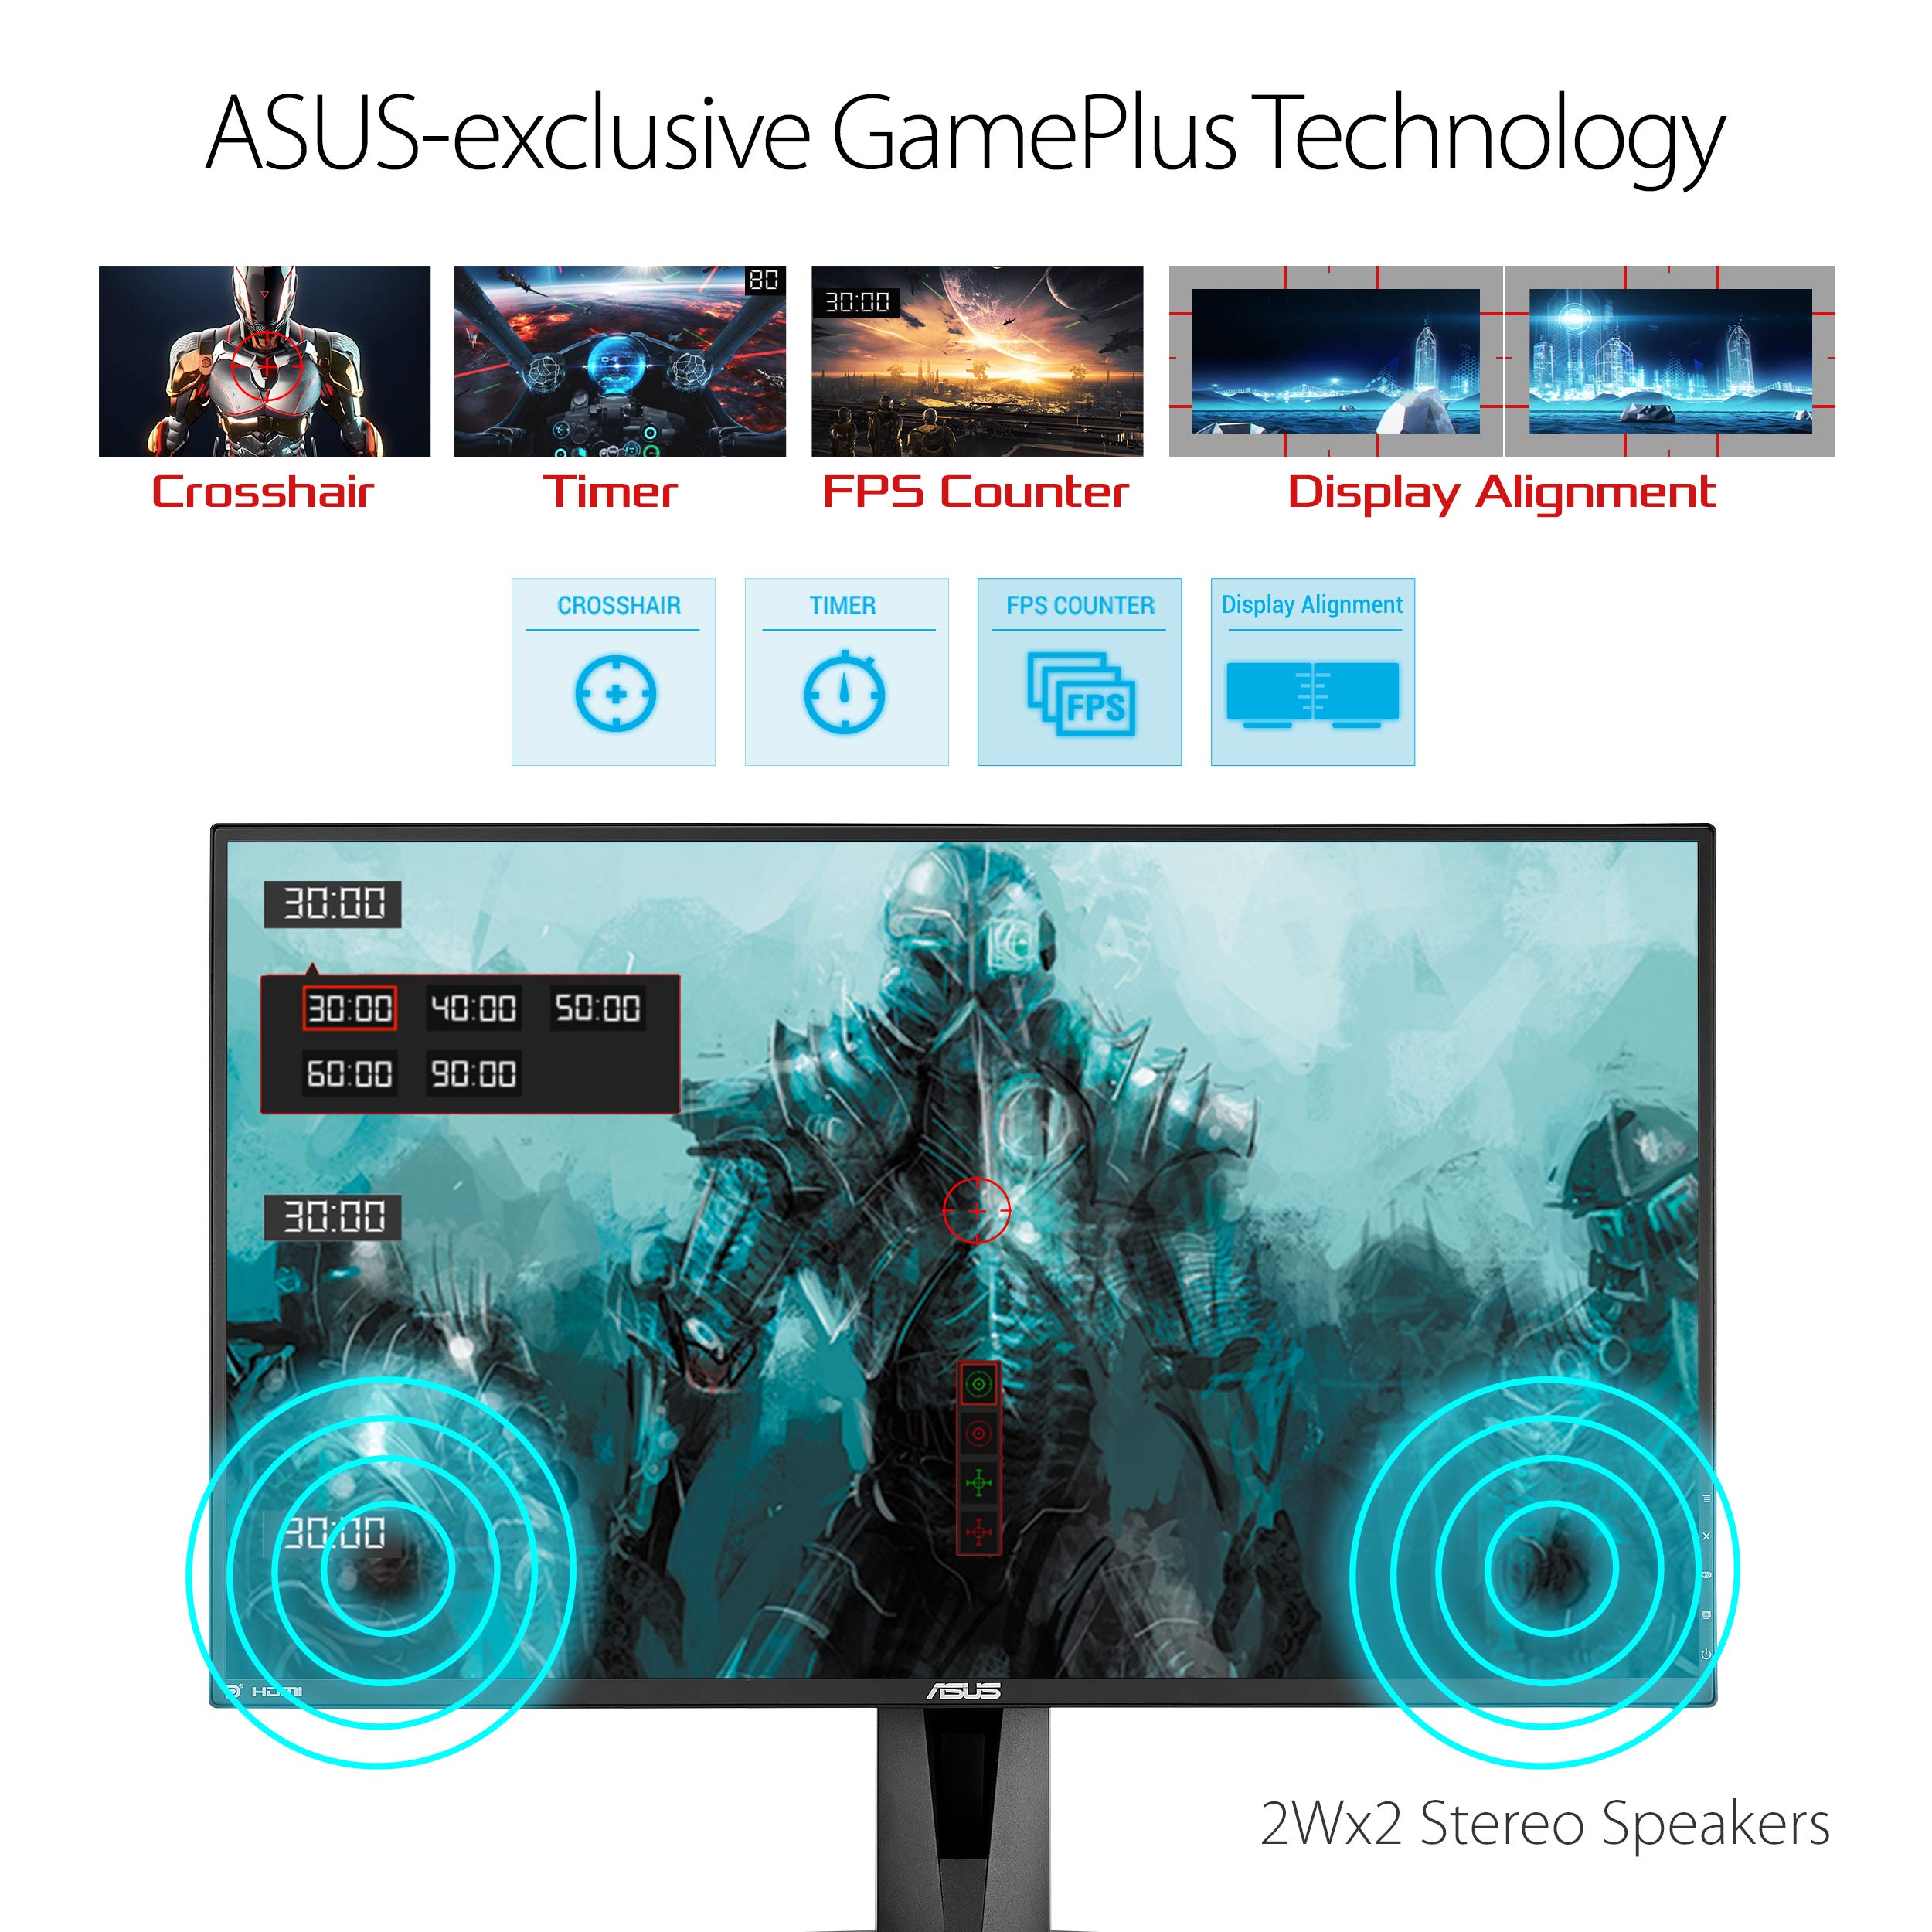 ASUS VG278QR 27” Gaming Monitor 165Hz Full HD (1920 x 1080) 0.5ms G-SYNC Eye Care DisplayPort HDMI DVI, Black